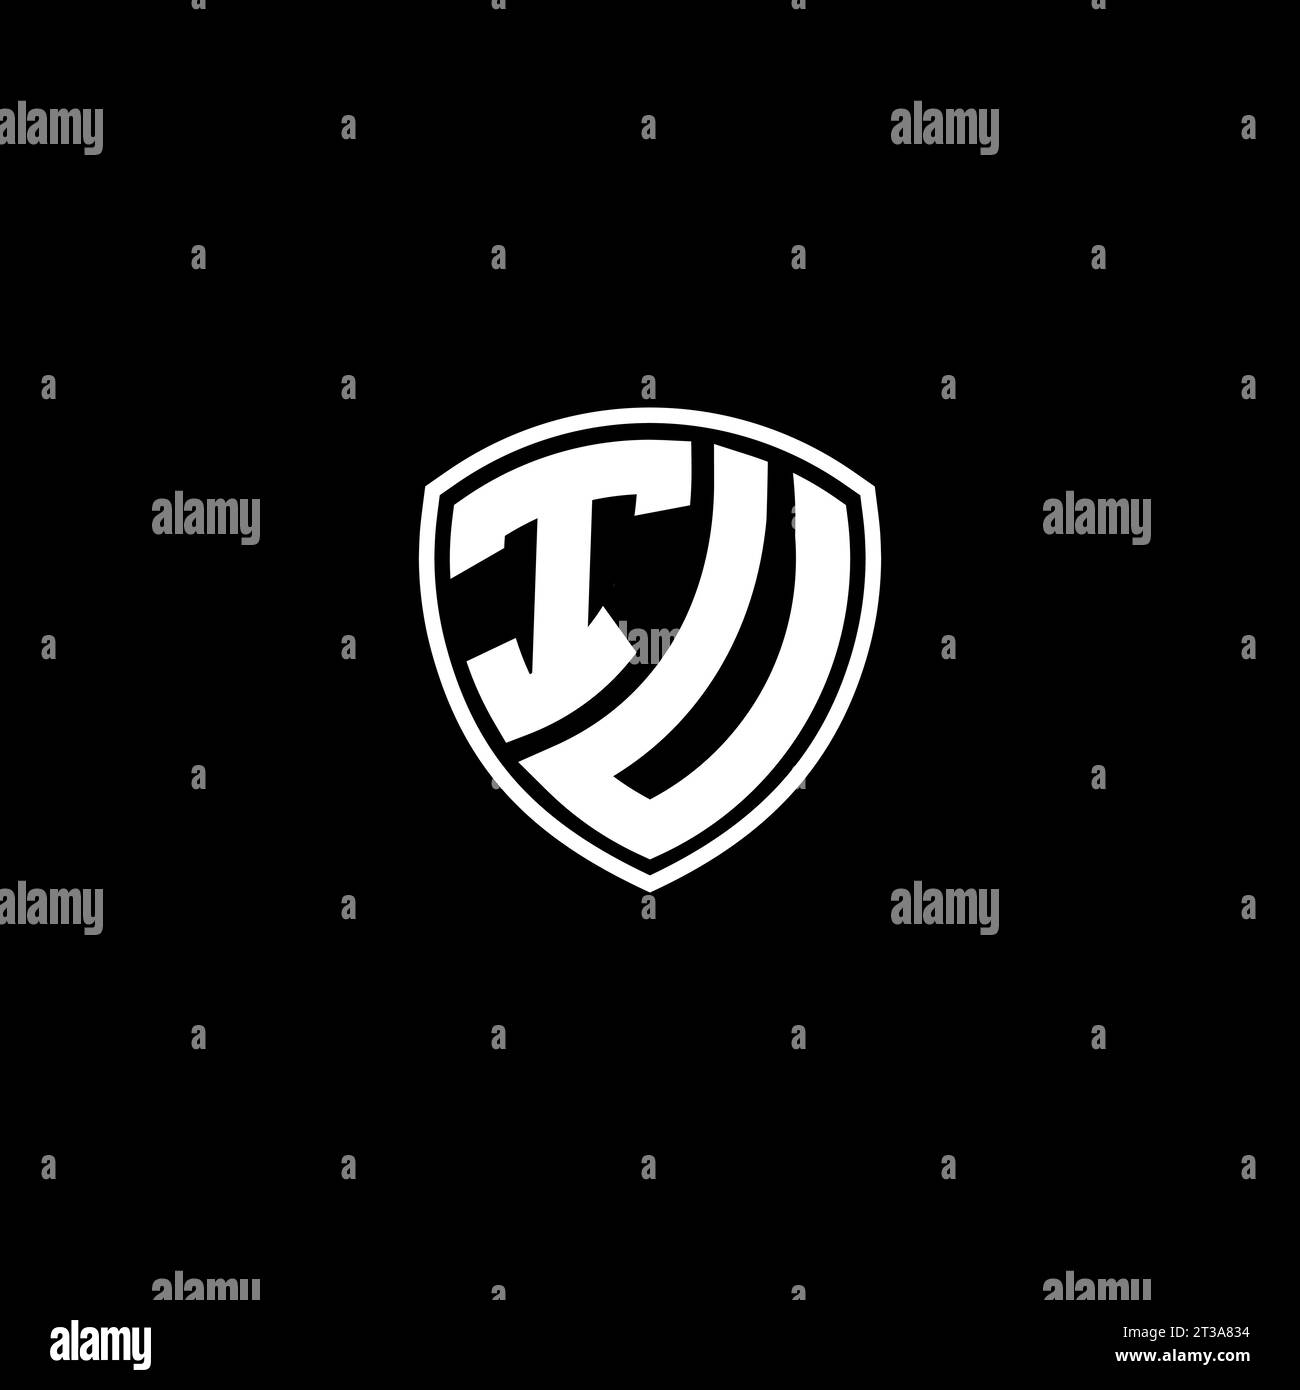 IU logo monogram emblem style with shield shape design template ideas Stock Vector